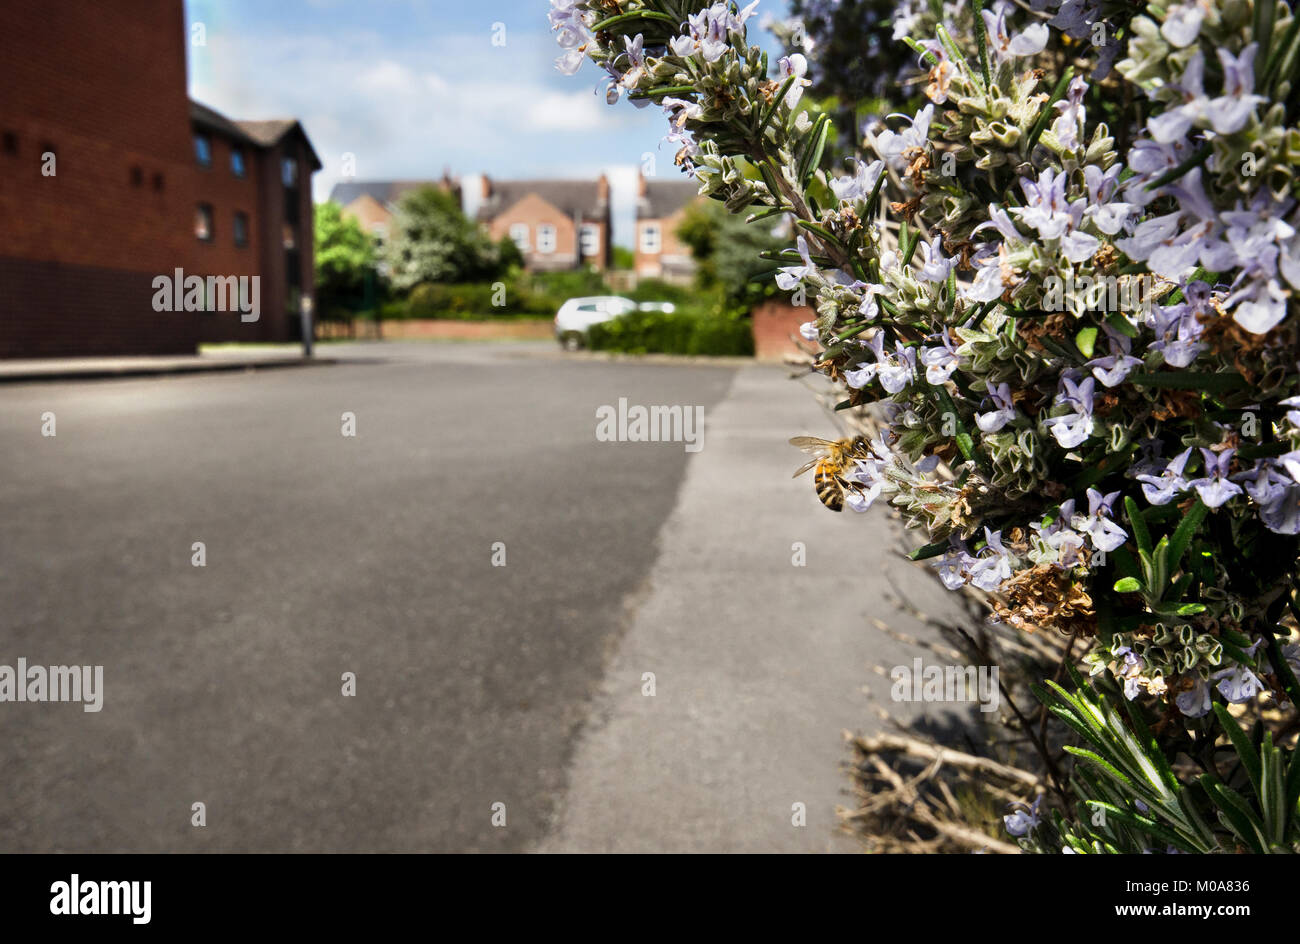 Honeybee feeds on rosemary flowers in a car park in Beeston, Nottingham, UK Stock Photo